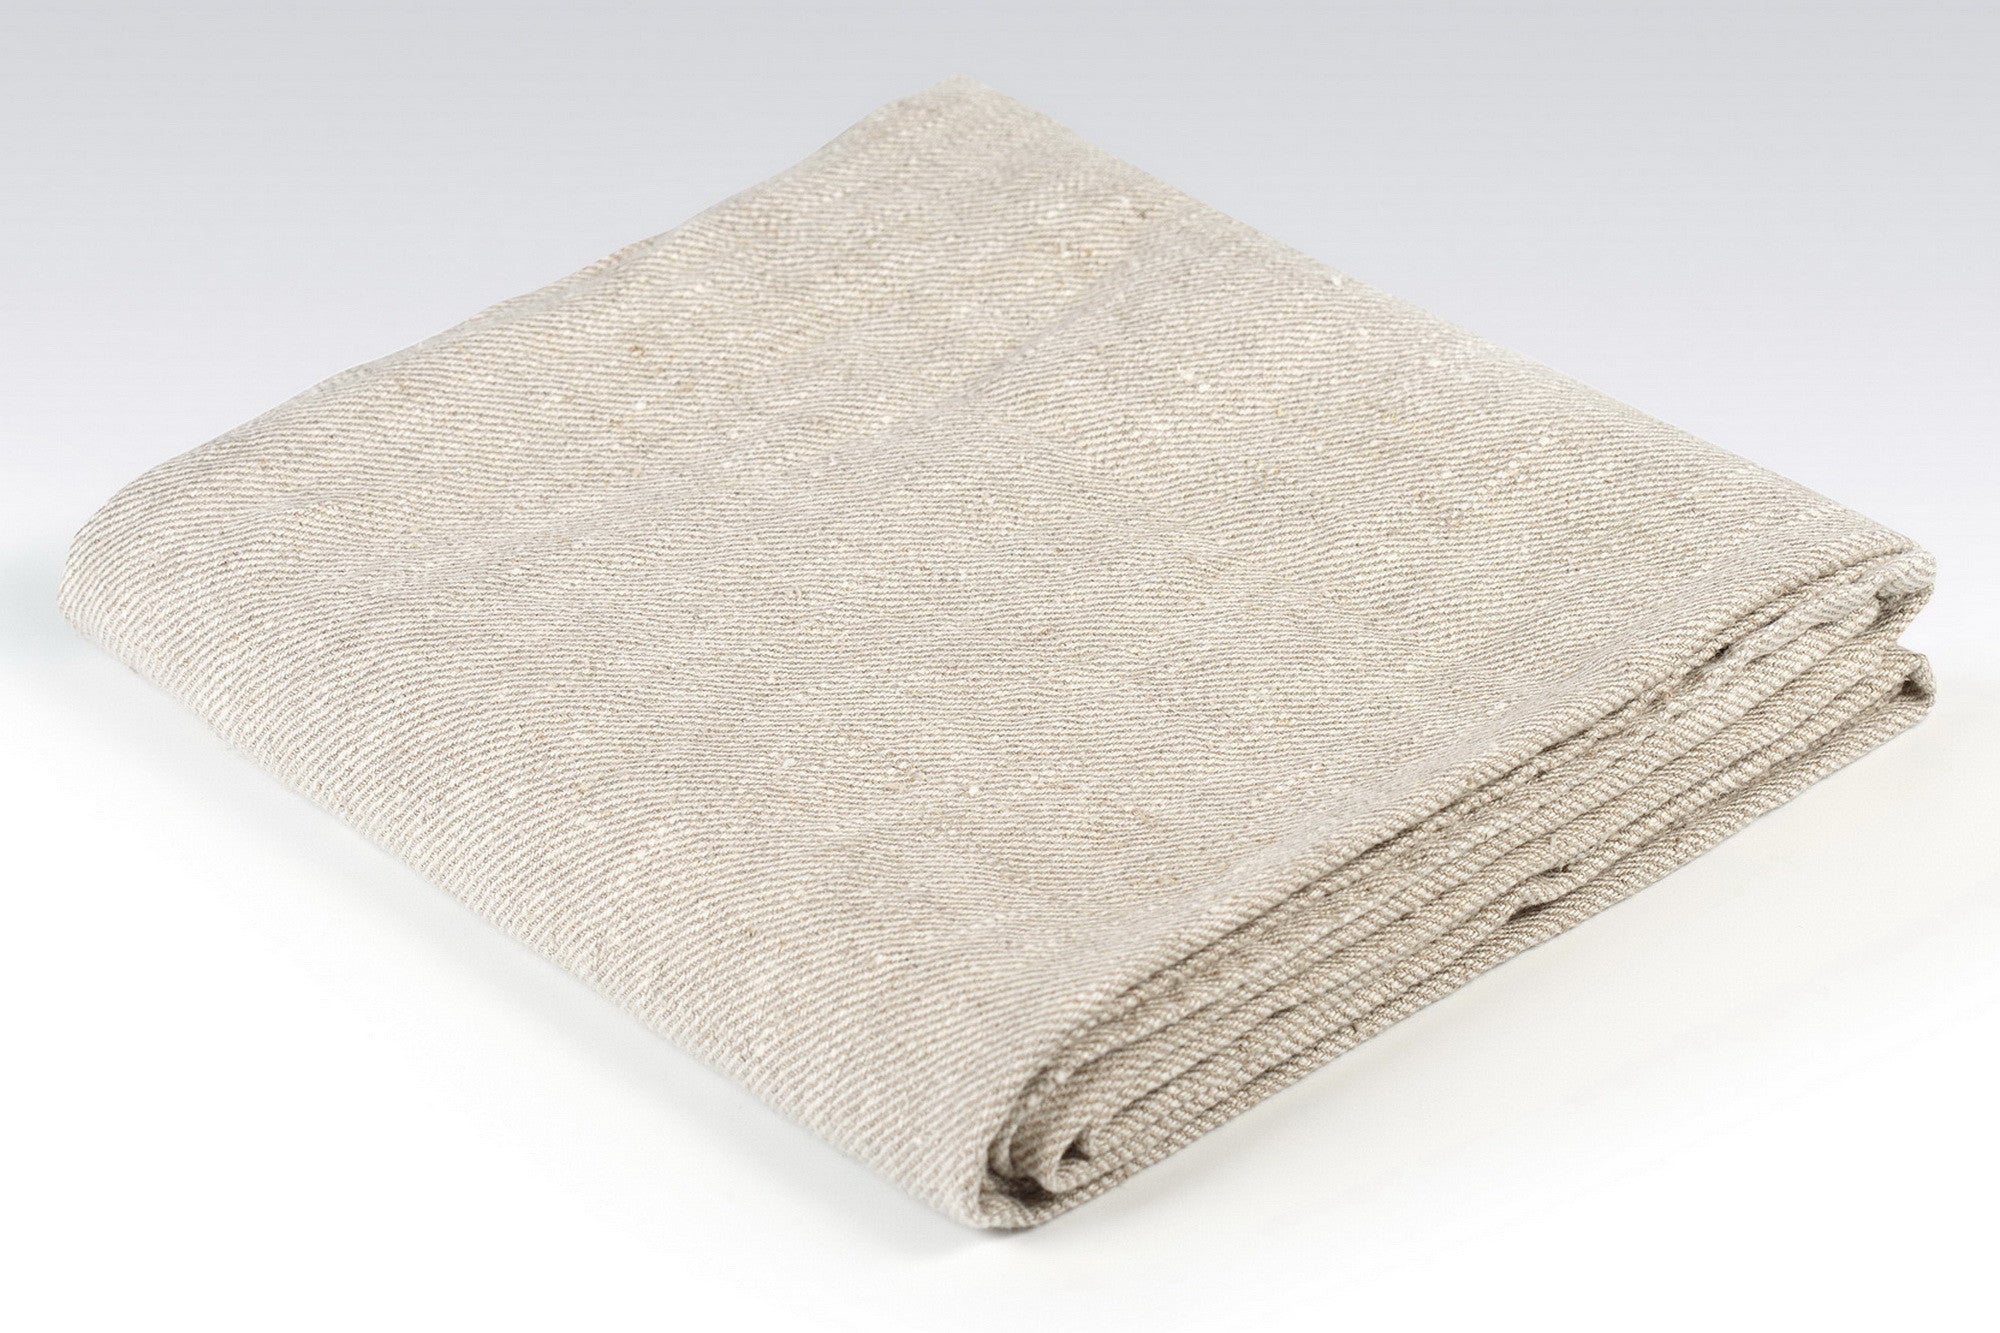 BLESS LINEN Natural Huckaback 100% Linen Bath Towel, 30 x 58 Inches